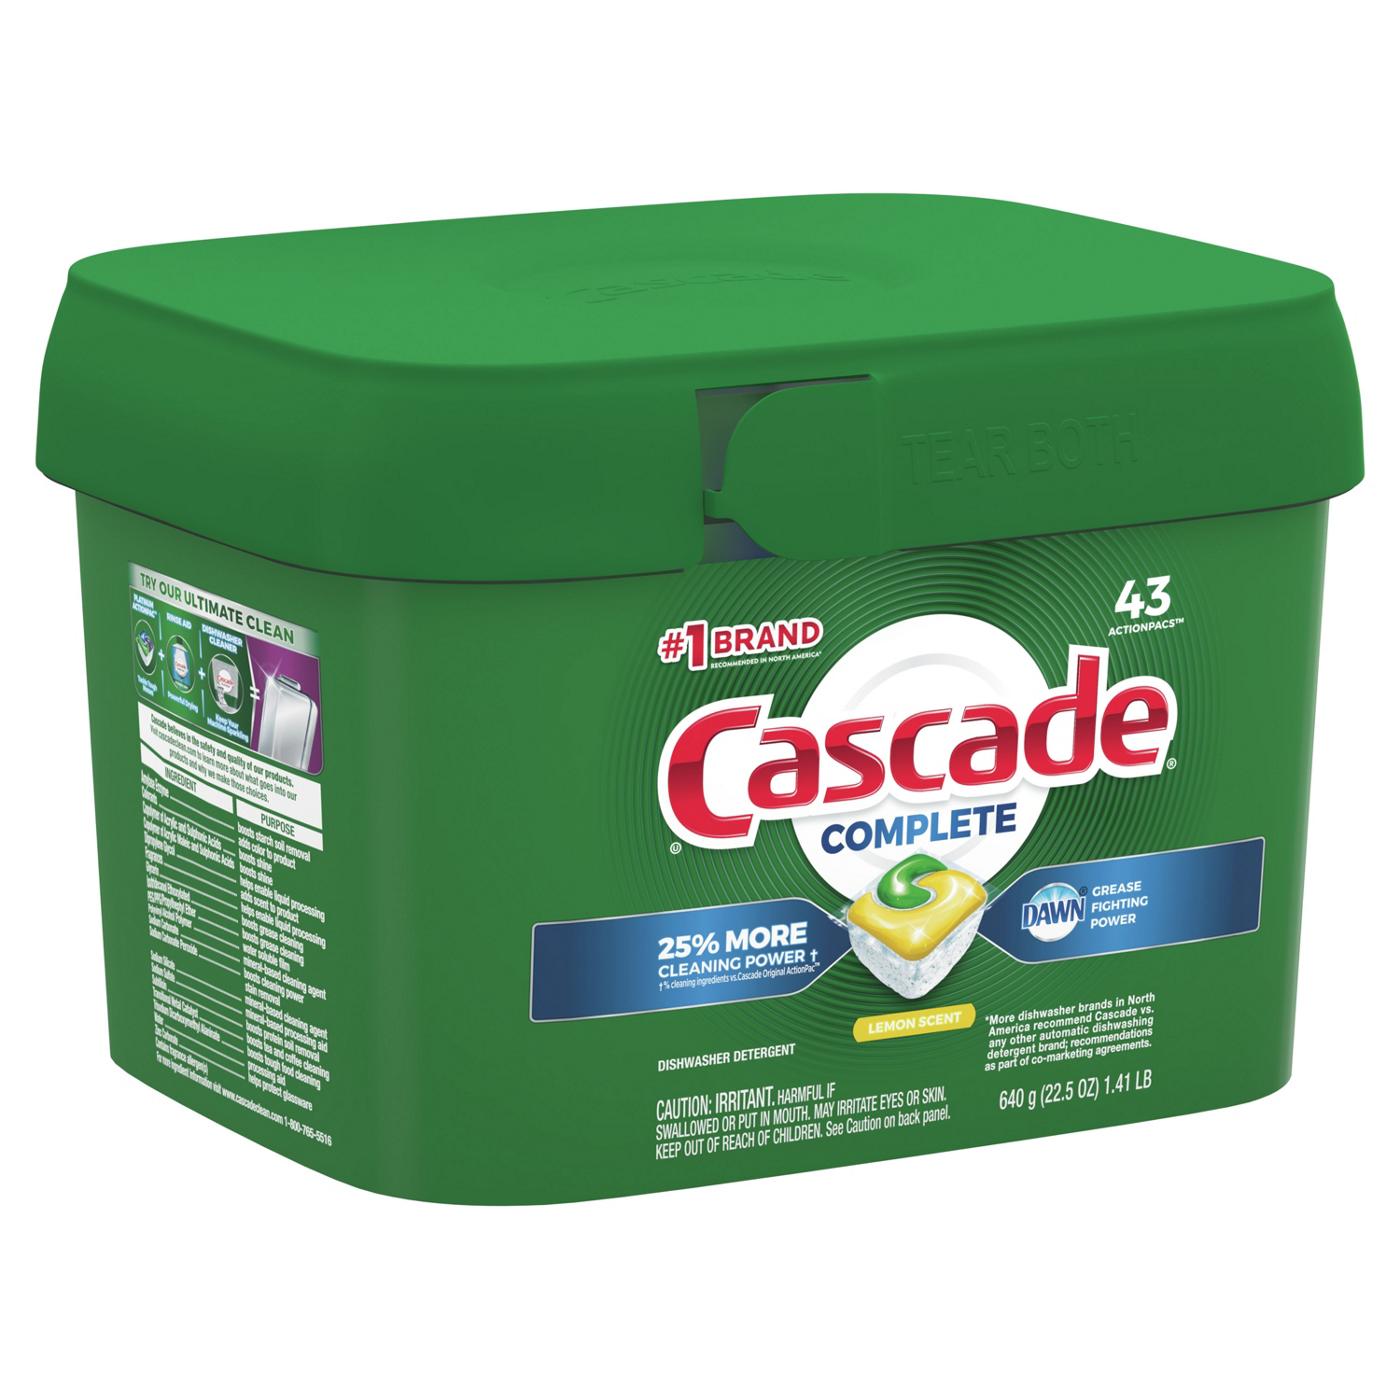 Cascade Dishwasher Detergent, Fresh Scent, Original, ActionPacs